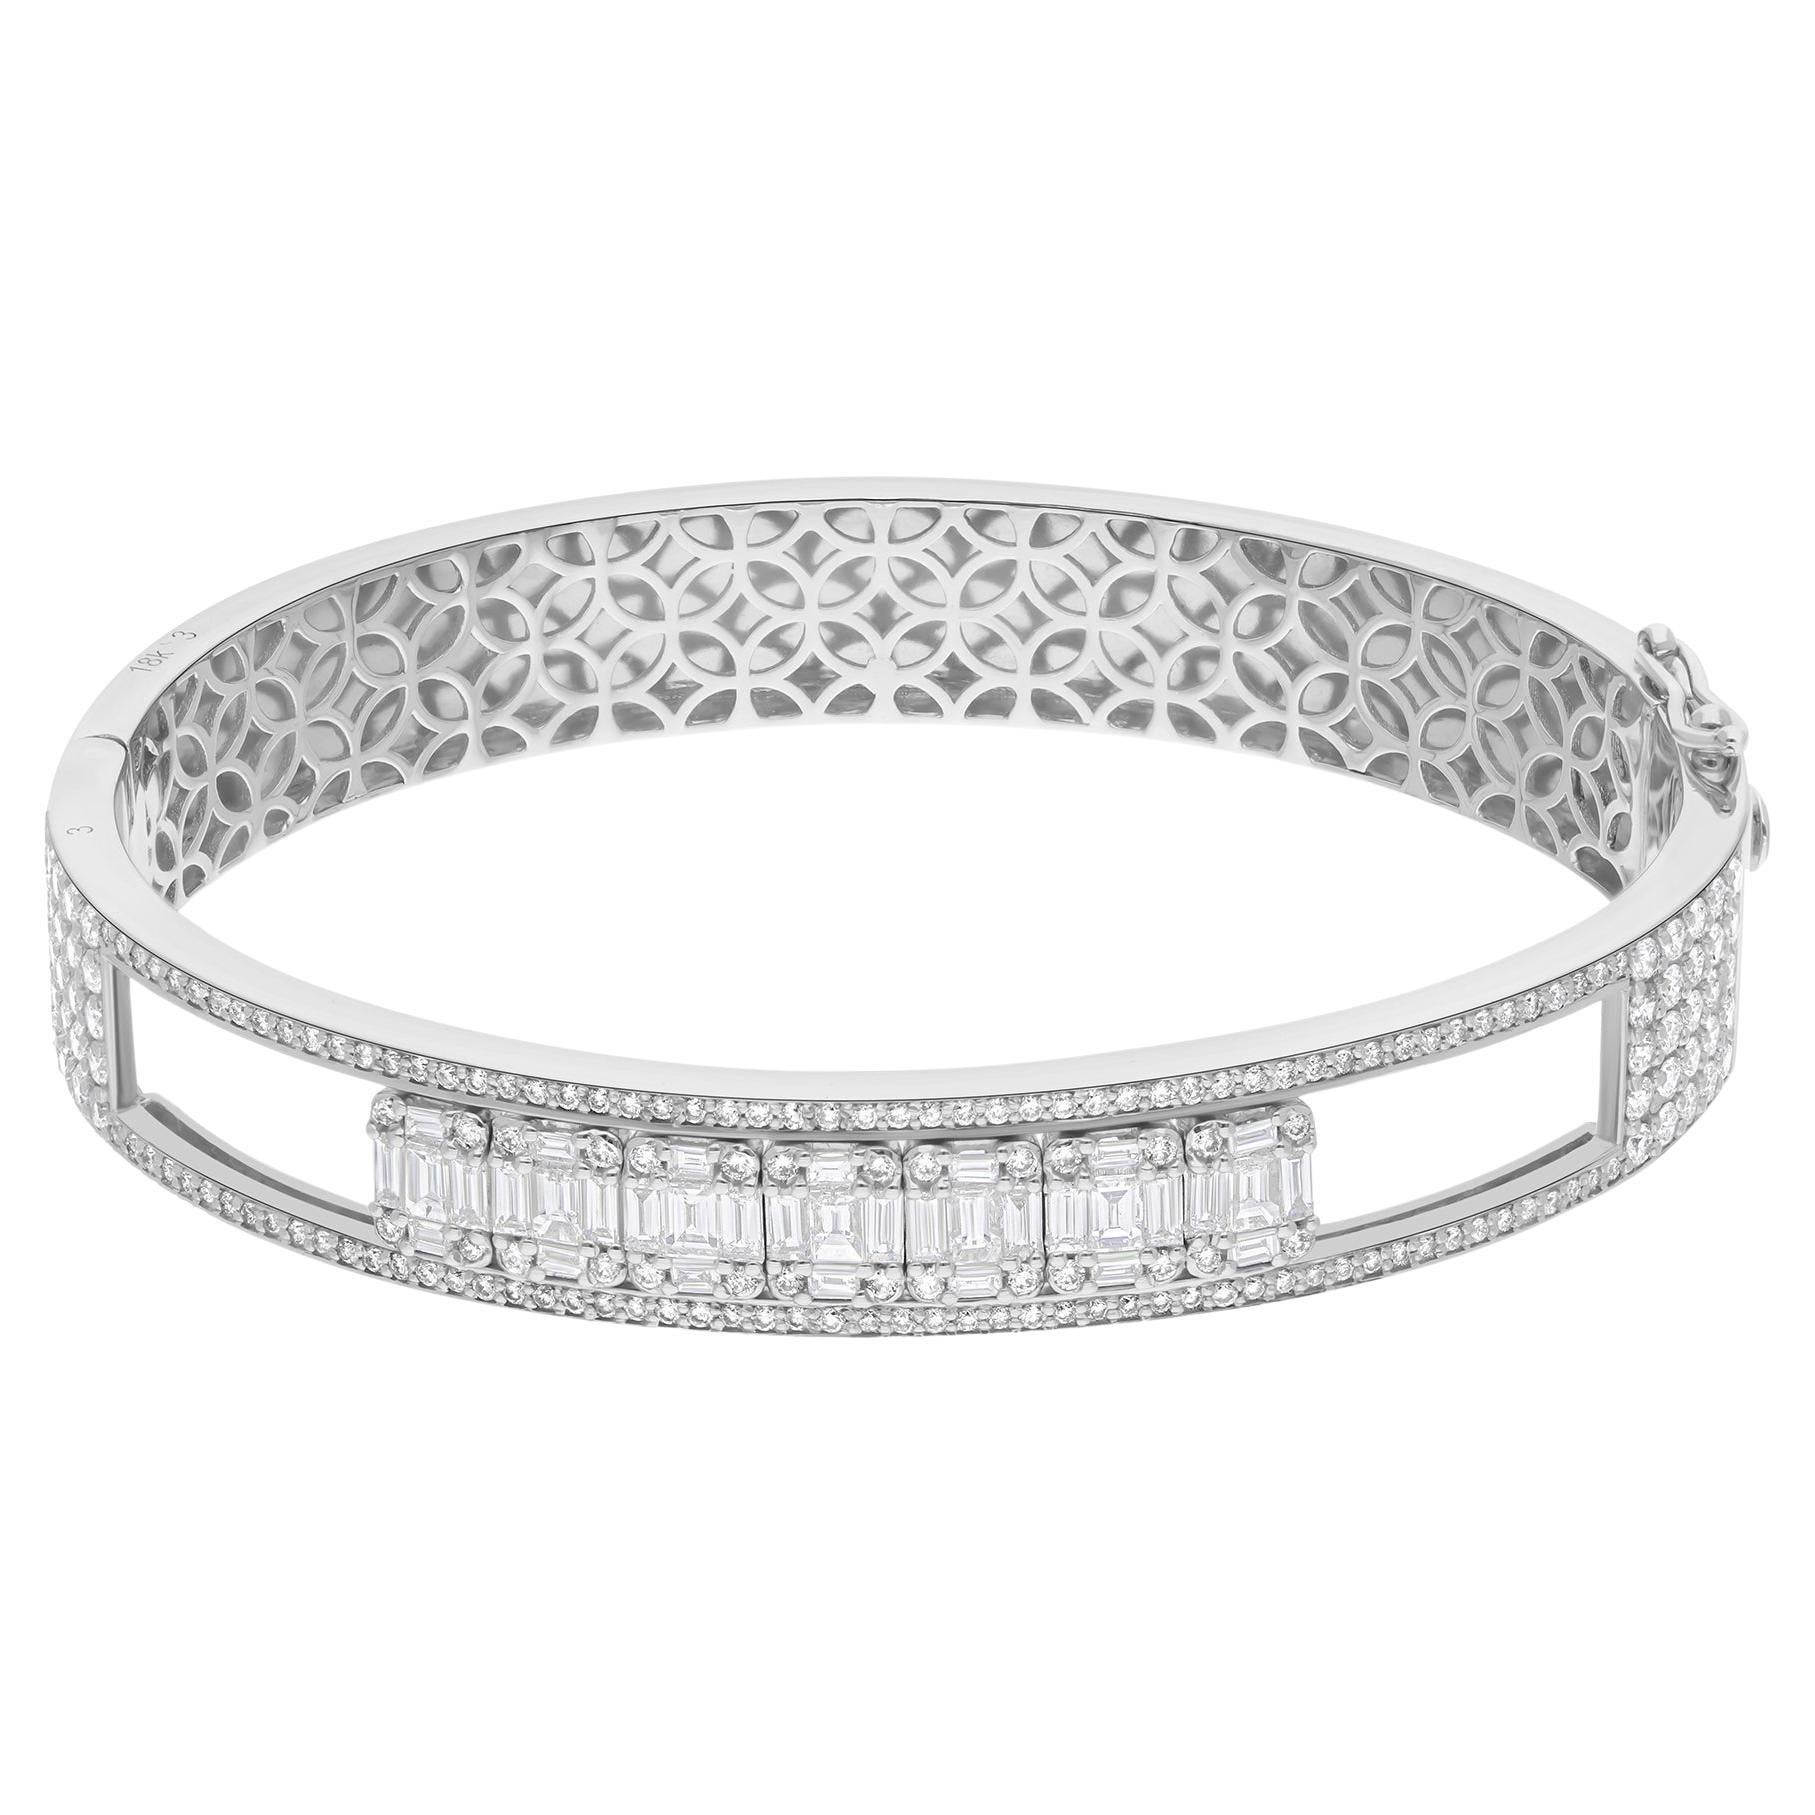 SI Clarity HI Color Movable Diamond Charm Bracelet 18 Karat White Gold Jewelry